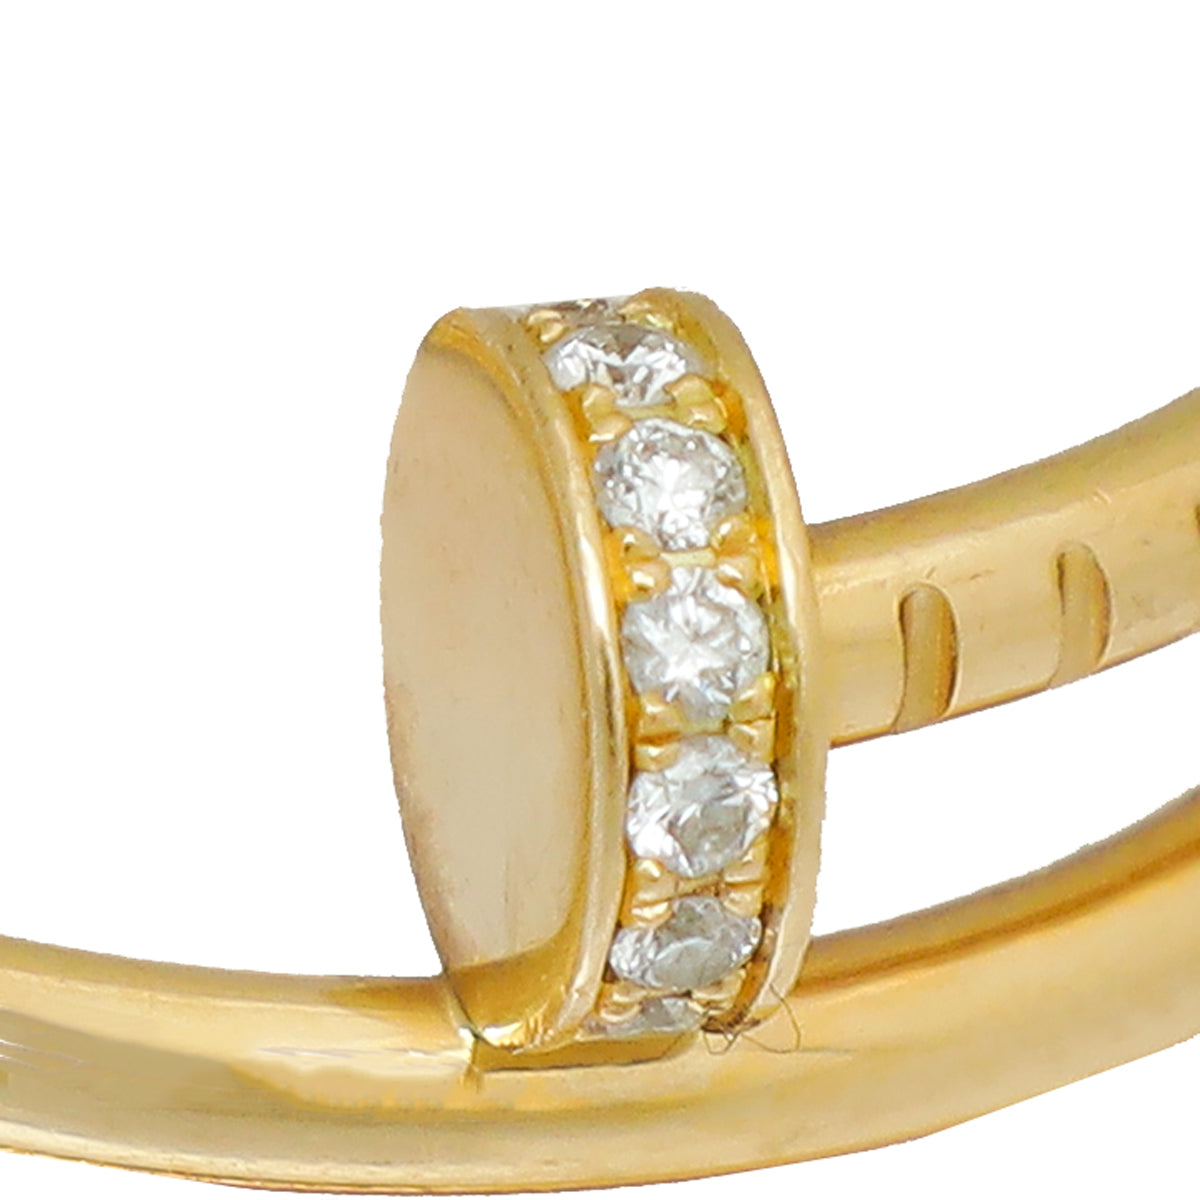 Cartier 18K Yellow Gold Diamond Double Juste Un Clou Ring 55